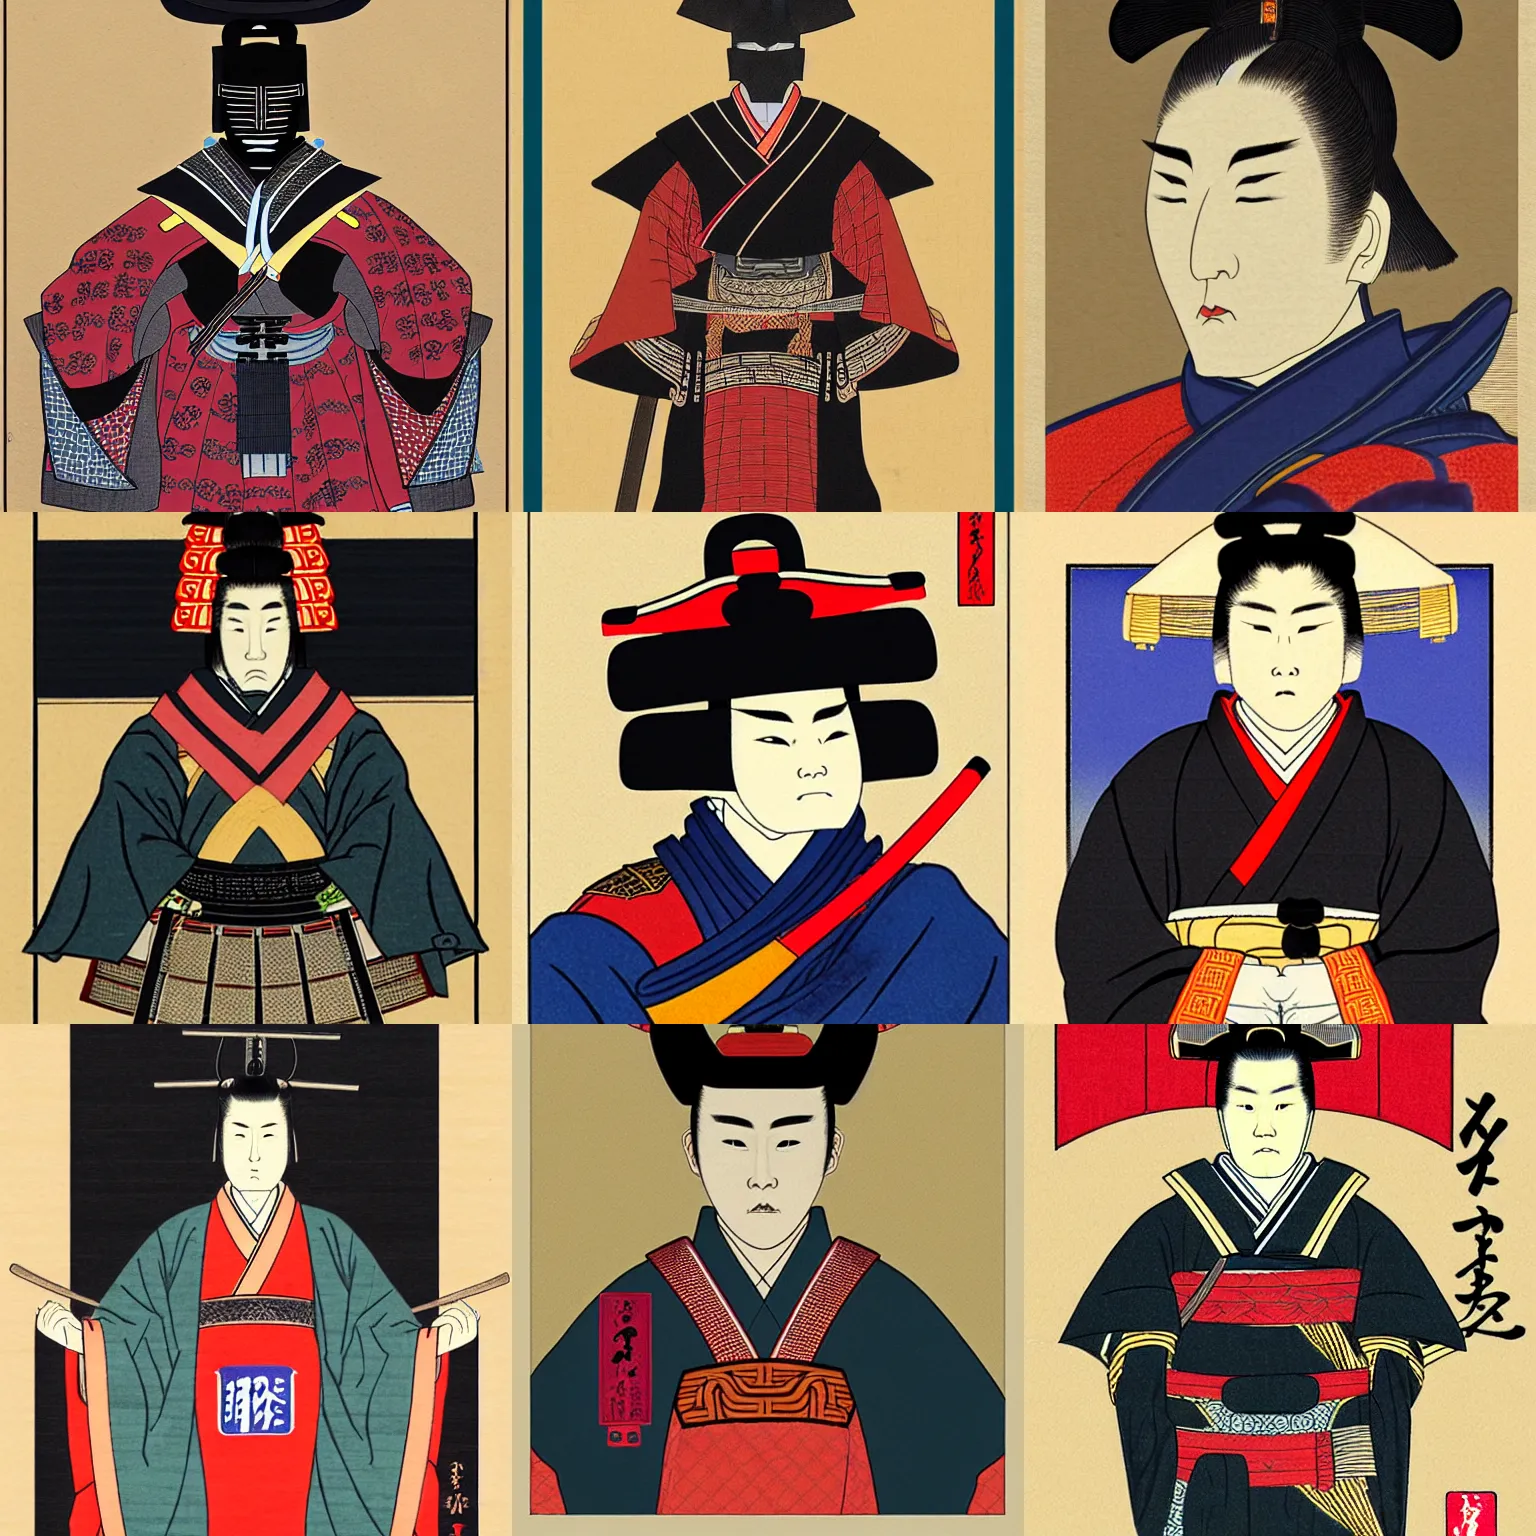 Prompt: official portrait of a samurai, ceremonial uniform, los angeles laker style, 1 7 1 1, ukiyo - e, trending on artstation